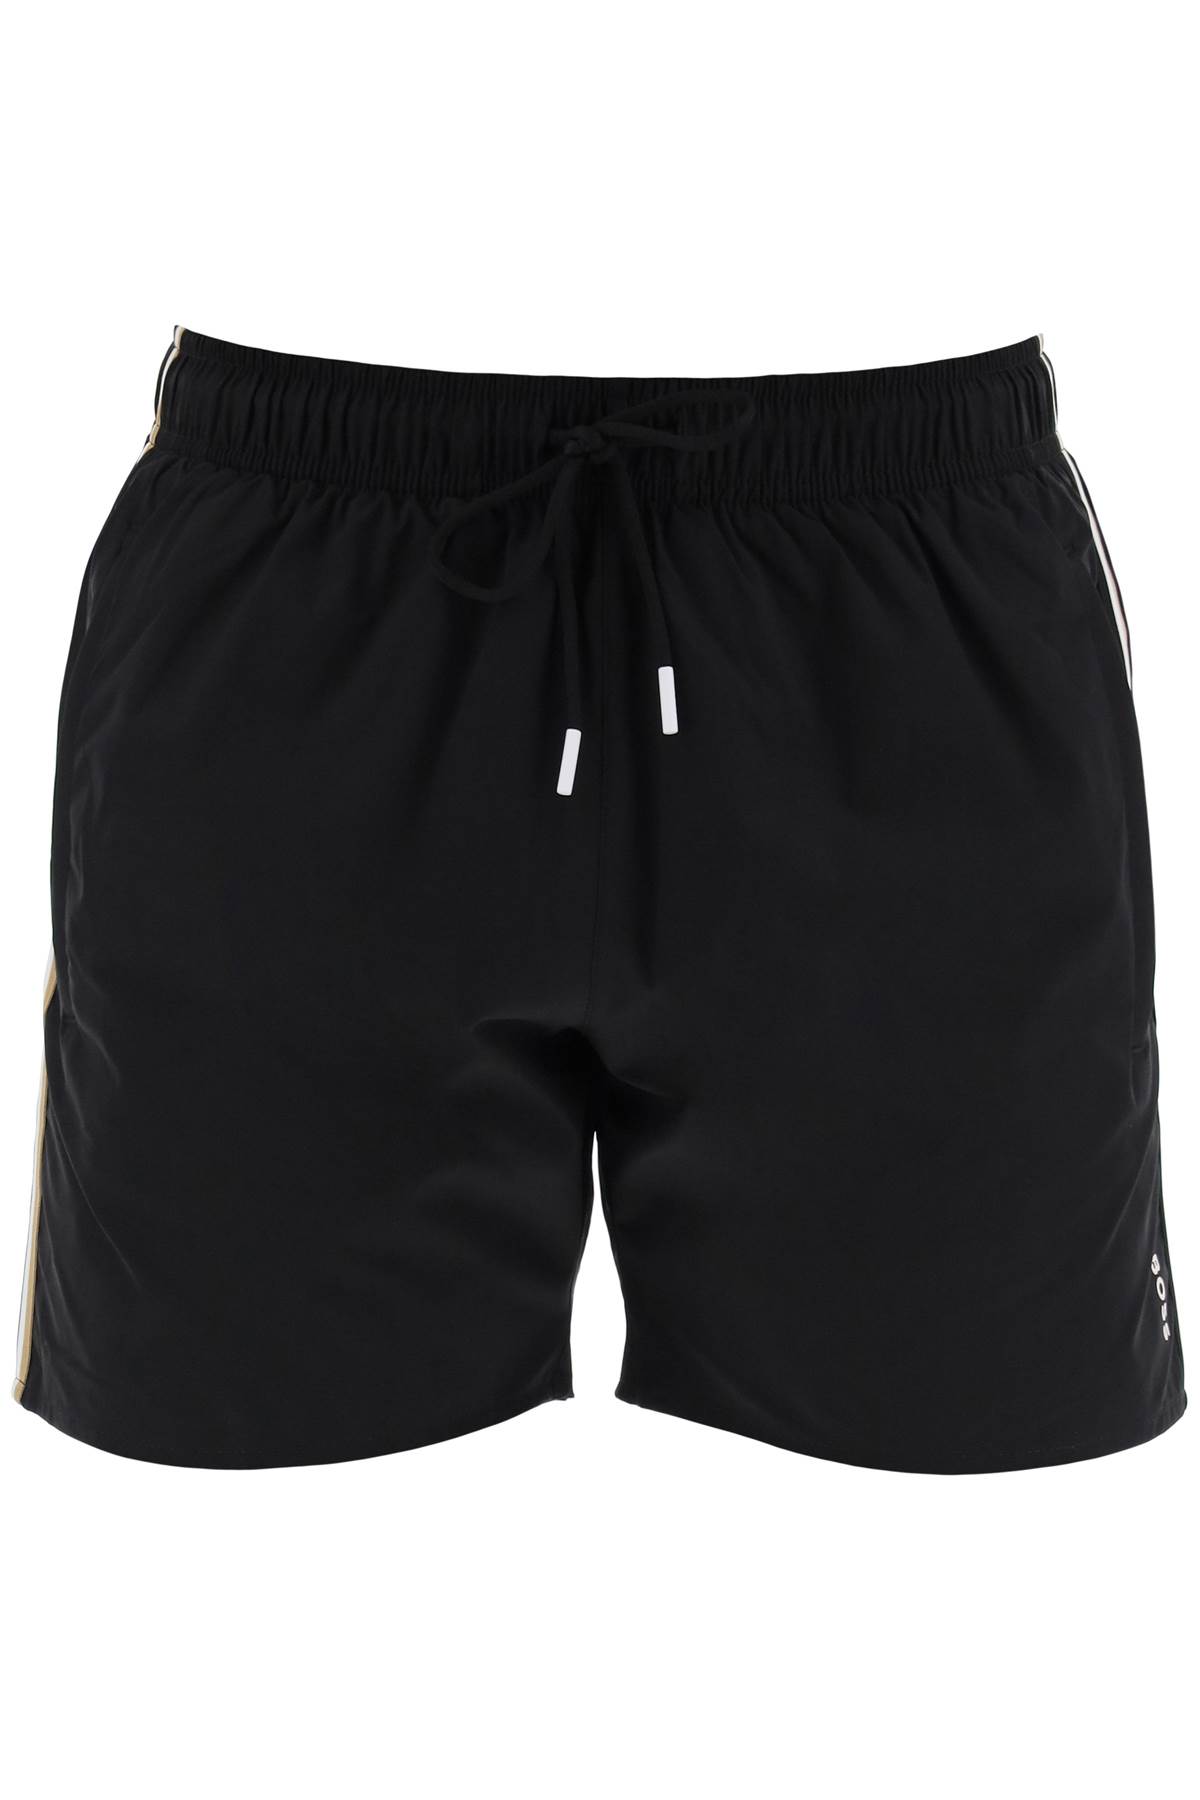 seaside Bermuda Shorts With Tr